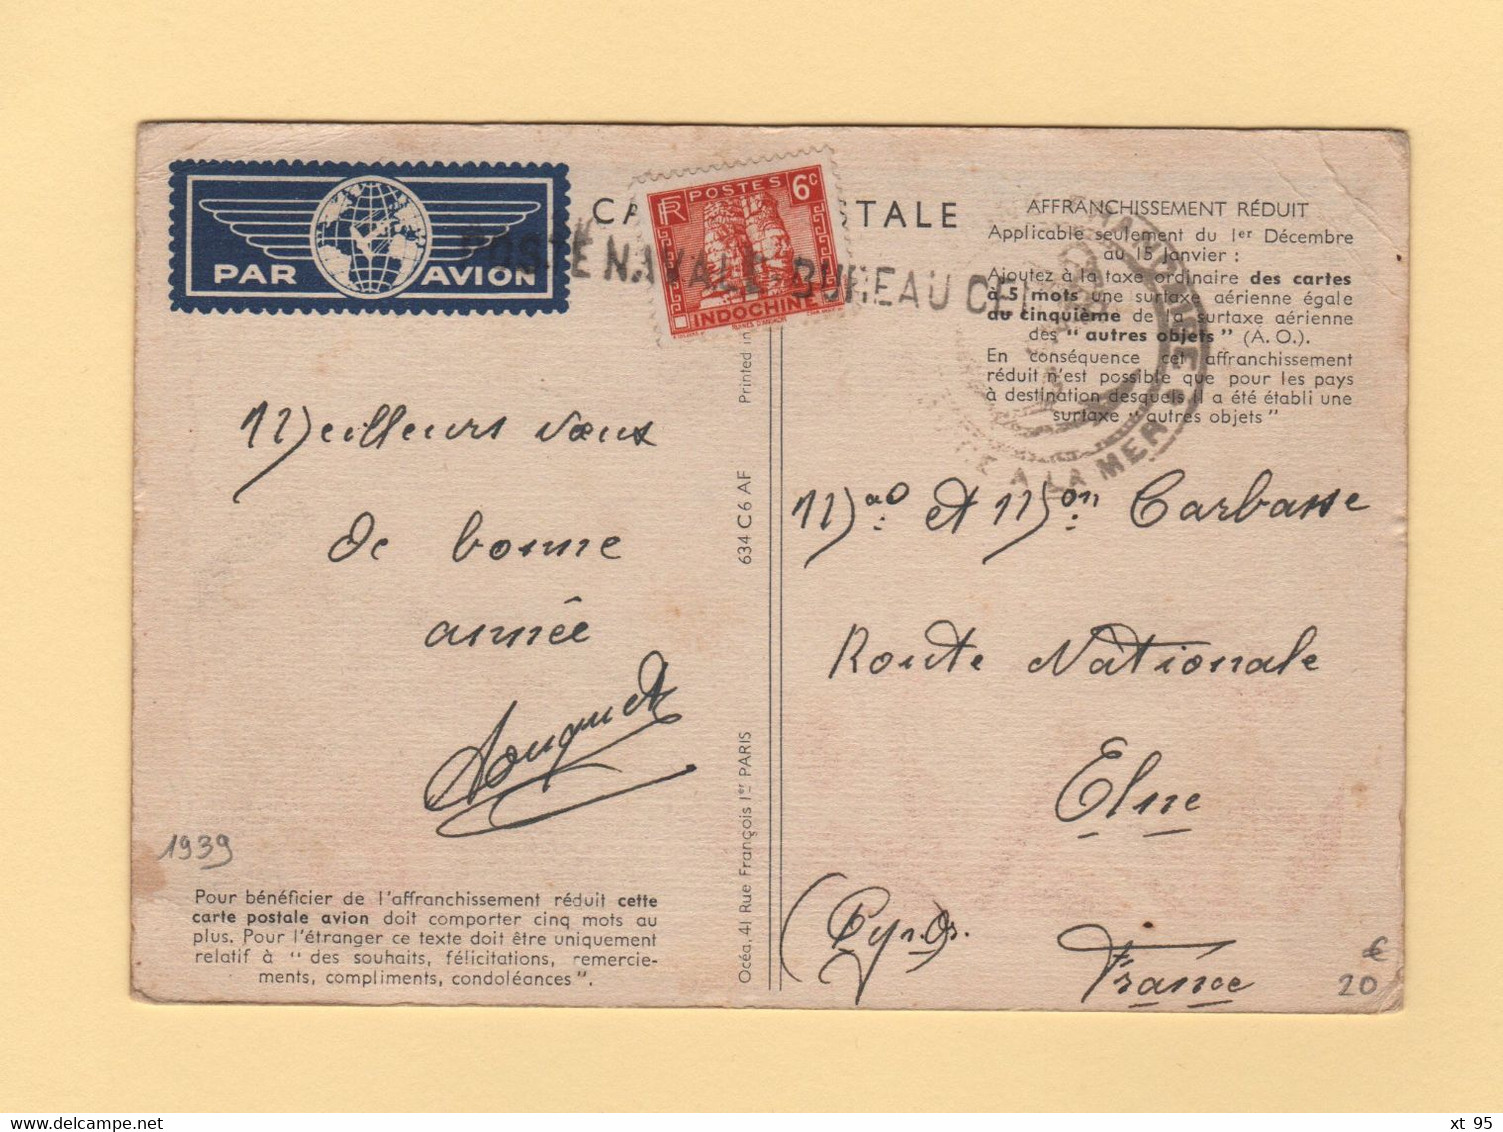 Air France - Carte Postale Affranchissement Reduit - Poste Navale Bureau Central - Indochine - 1960-.... Briefe & Dokumente